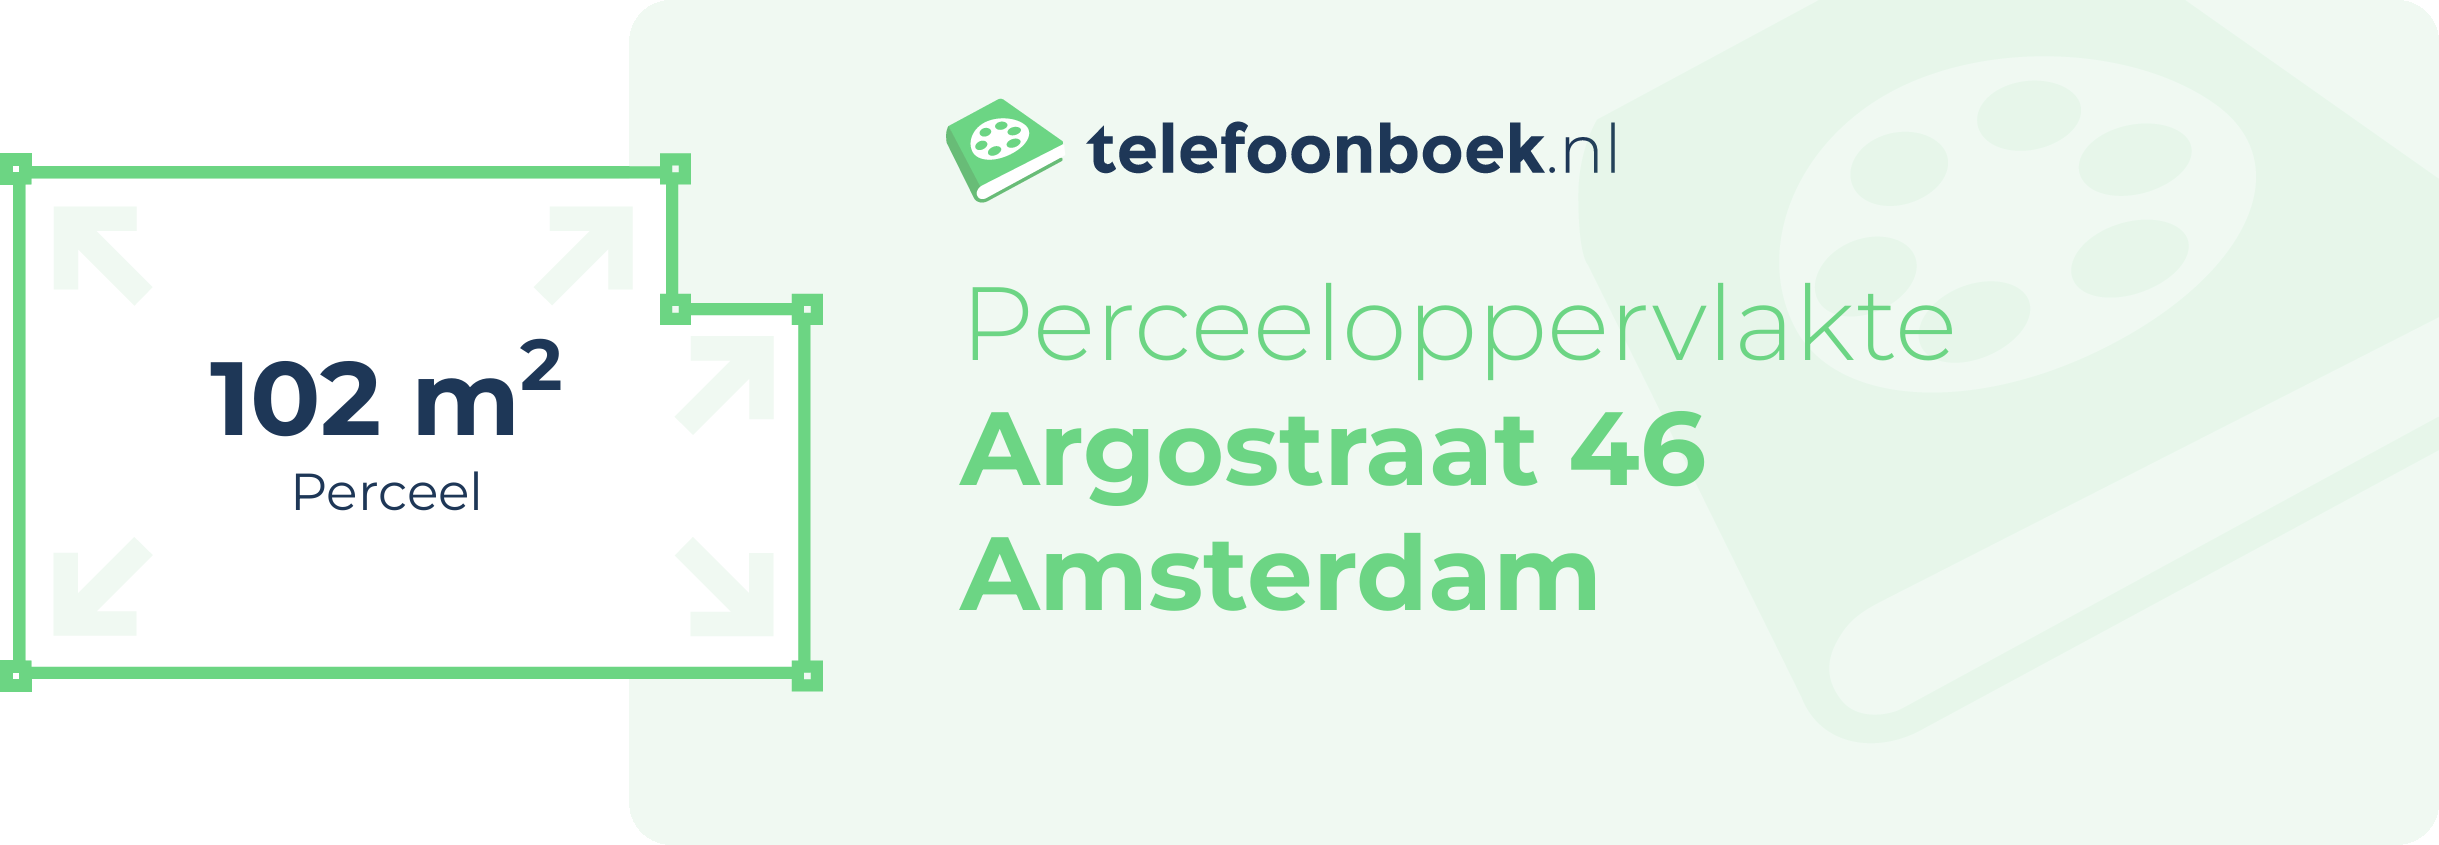 Perceeloppervlakte Argostraat 46 Amsterdam